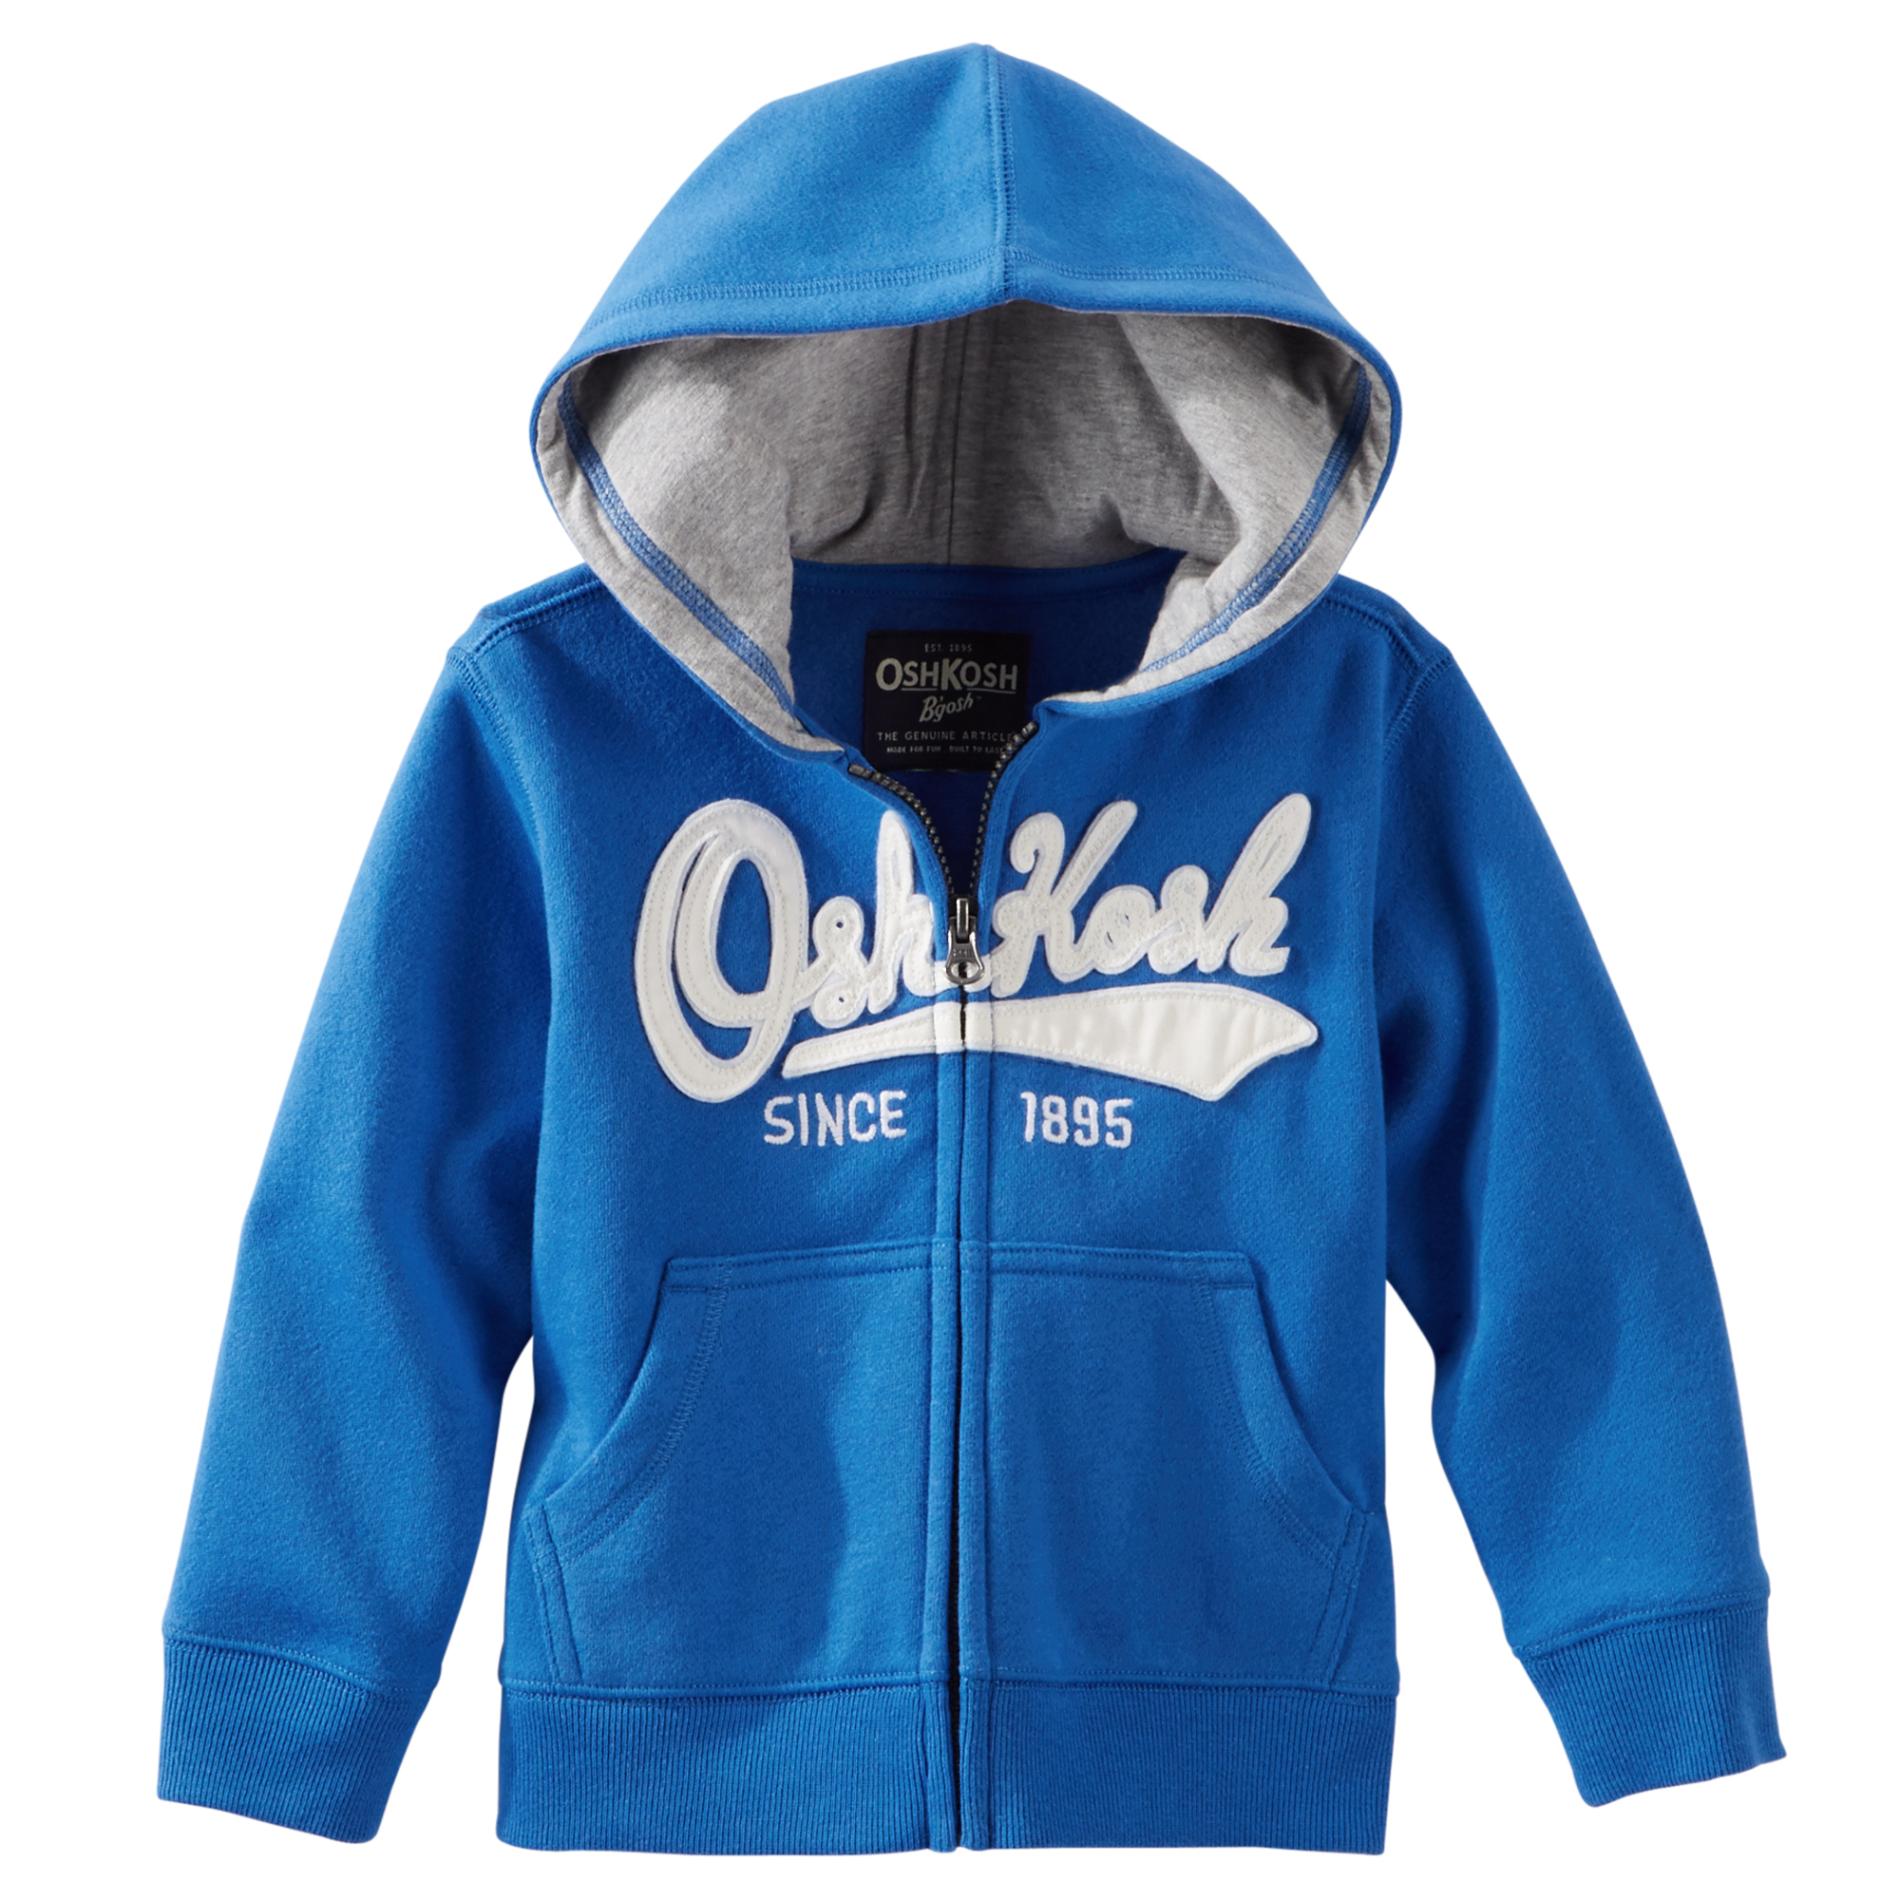 OshKosh Toddler Boy's Heritage Hoodie Jacket